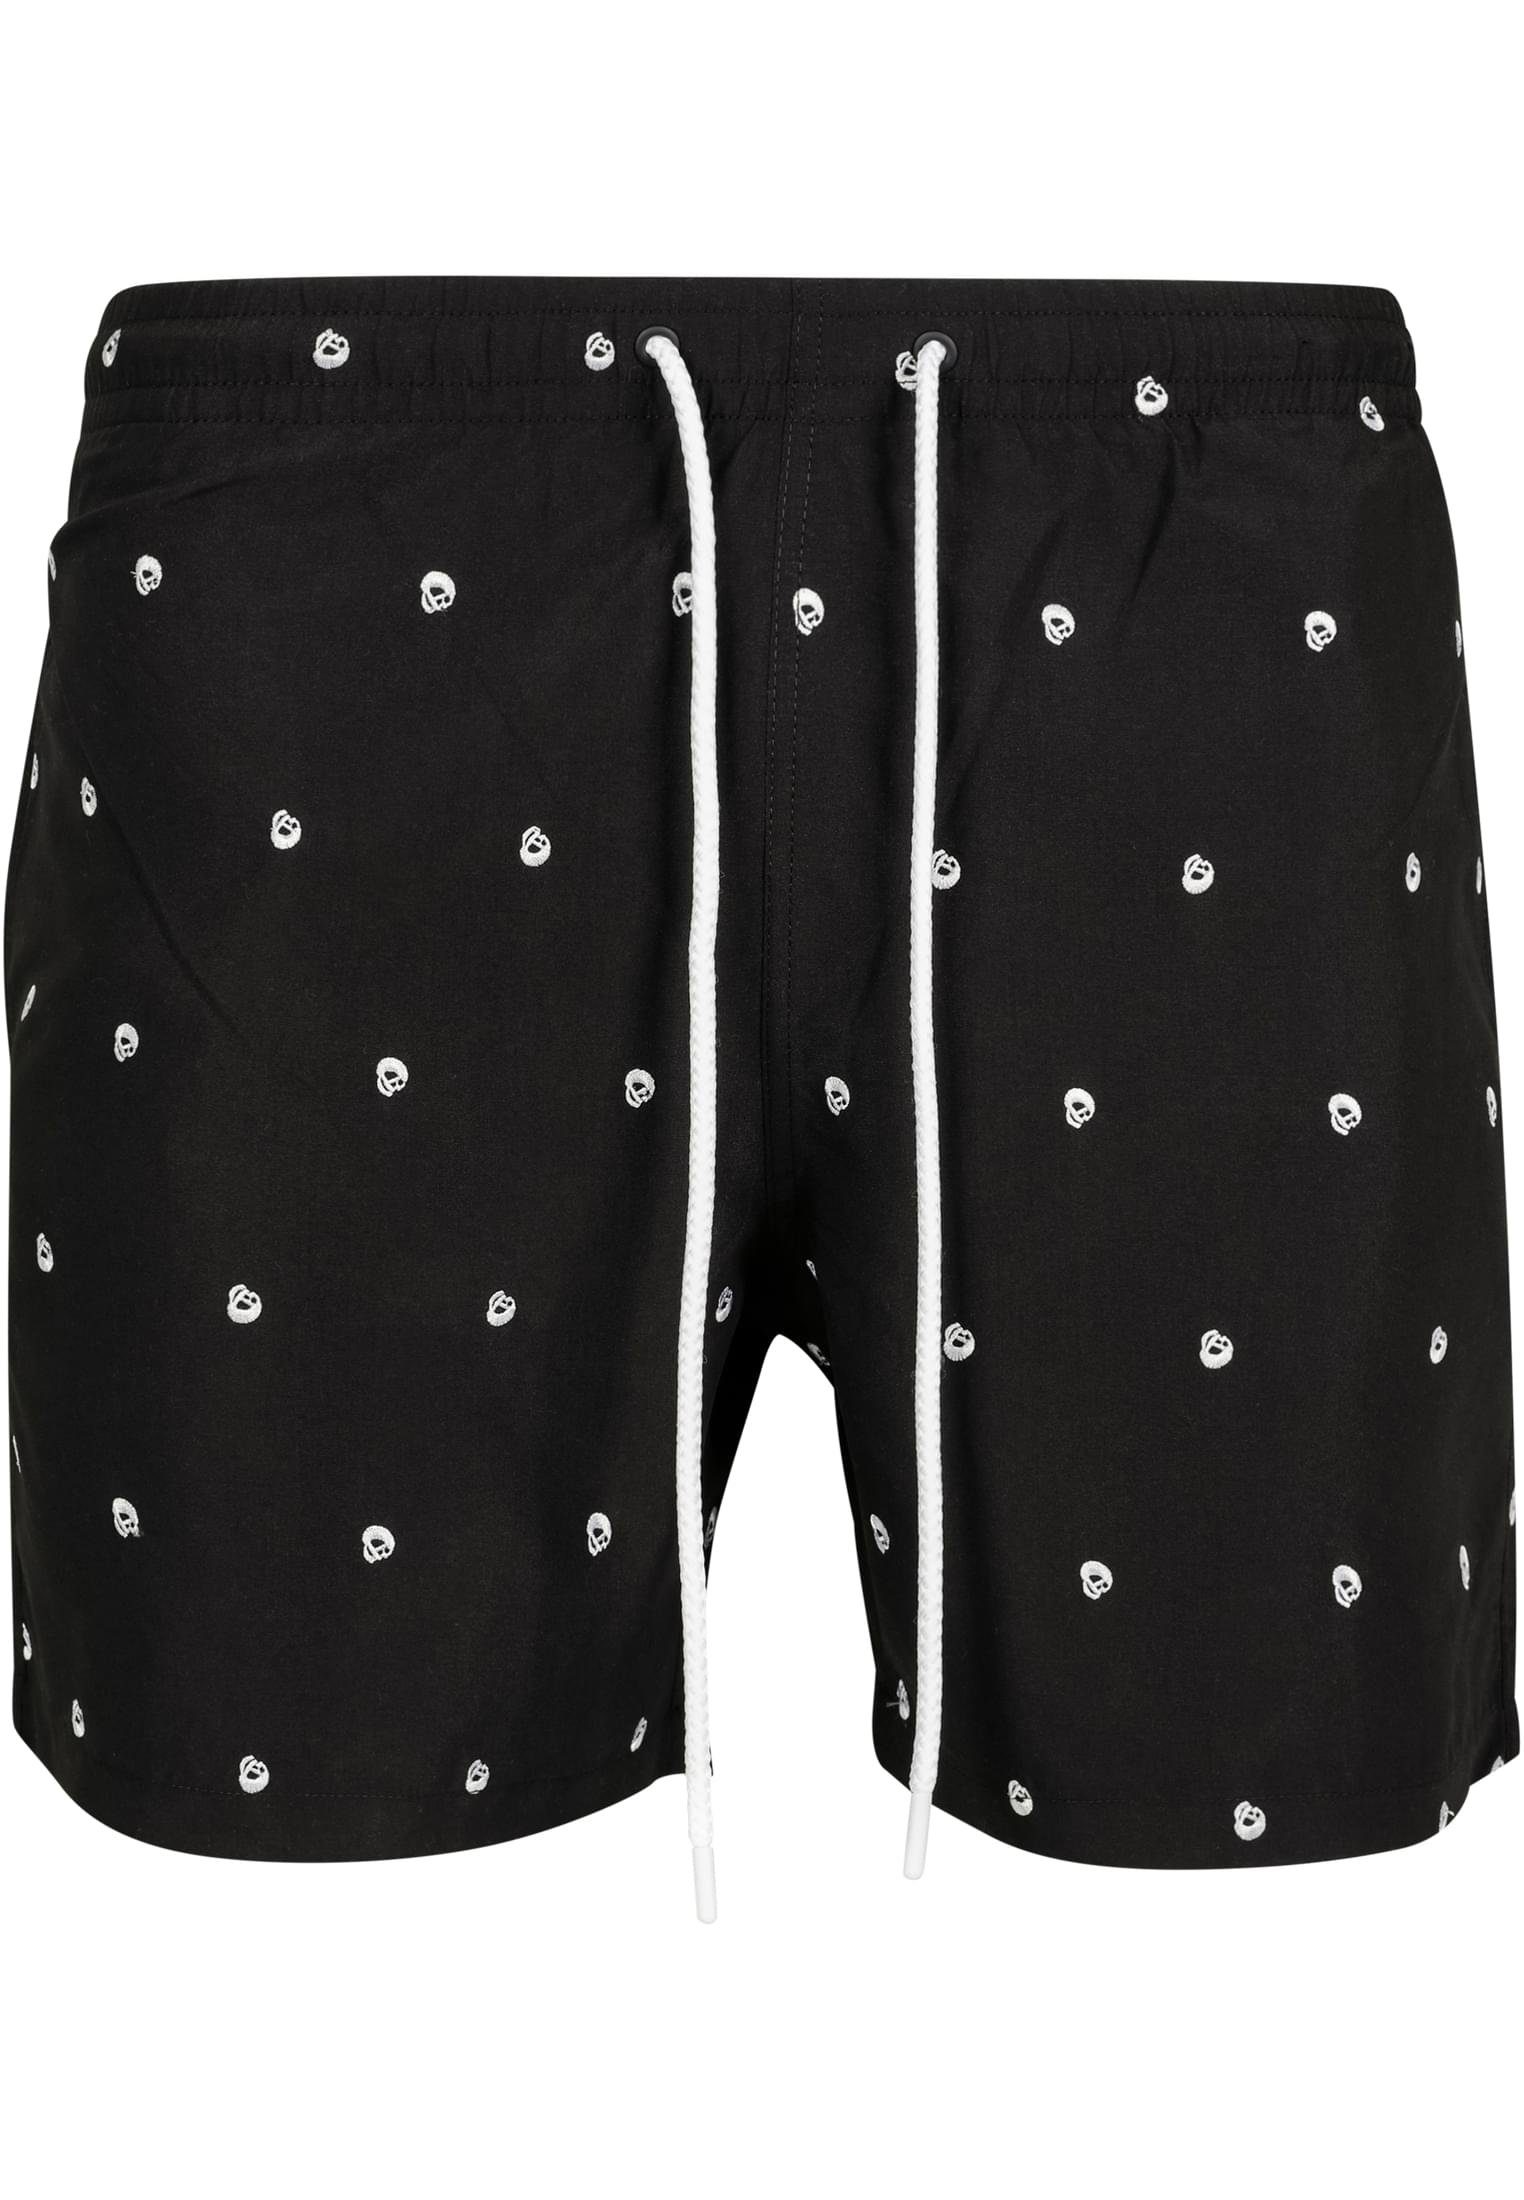 URBAN Embroidery Swim Badeshorts CLASSICS skull/black/white Herren Shorts